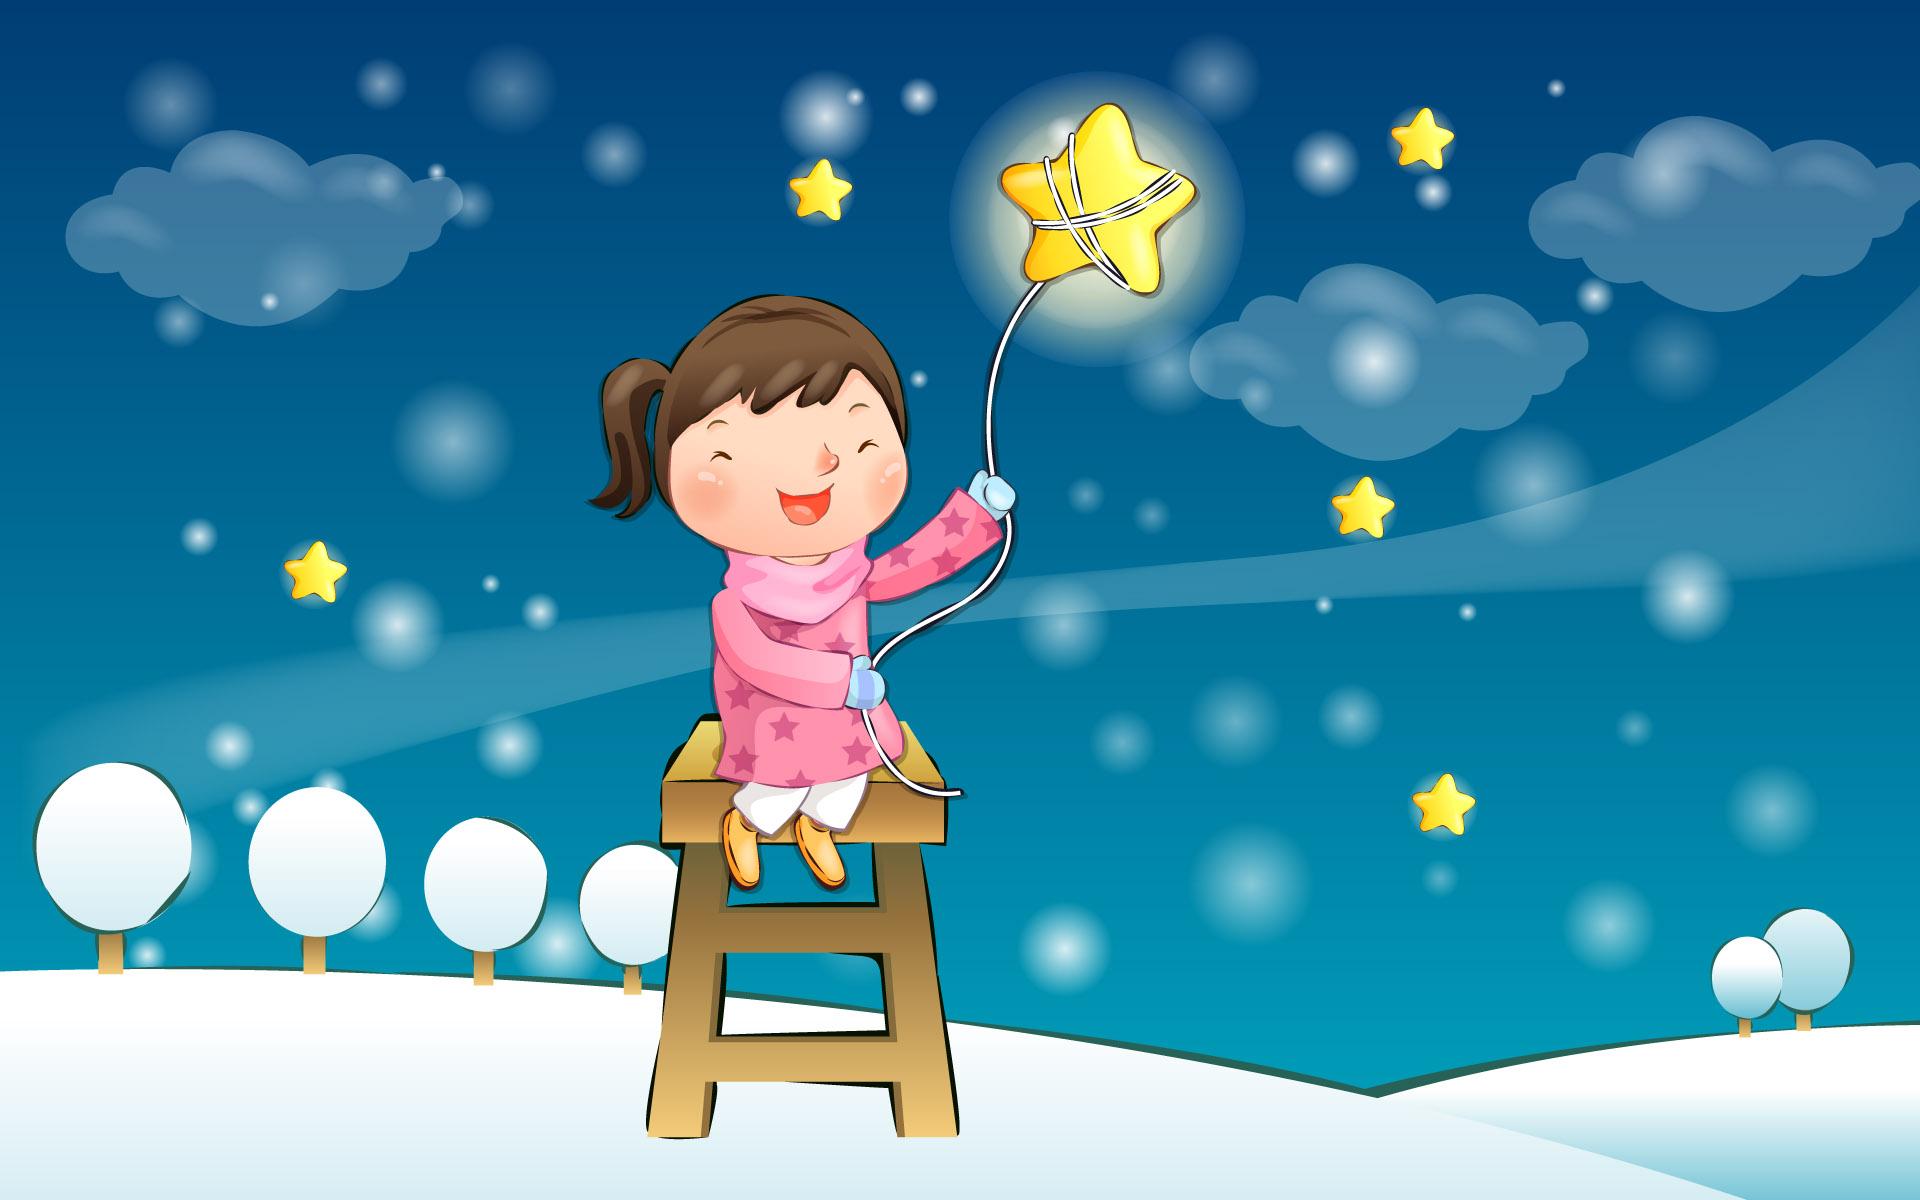 Happy childhood winter chapter illustrations 10934 tales illustration